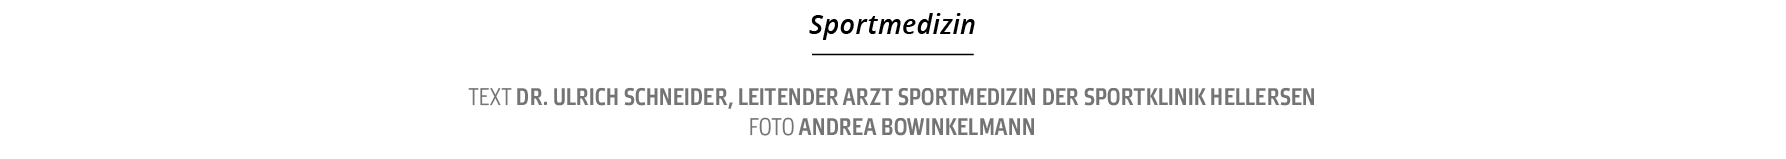 Text Dr  Ulrich Schneider, Leitender Arzt Sportmedizin der Sportklinik Hellersen Foto andrea Bowinkelmann,Sportmedizi